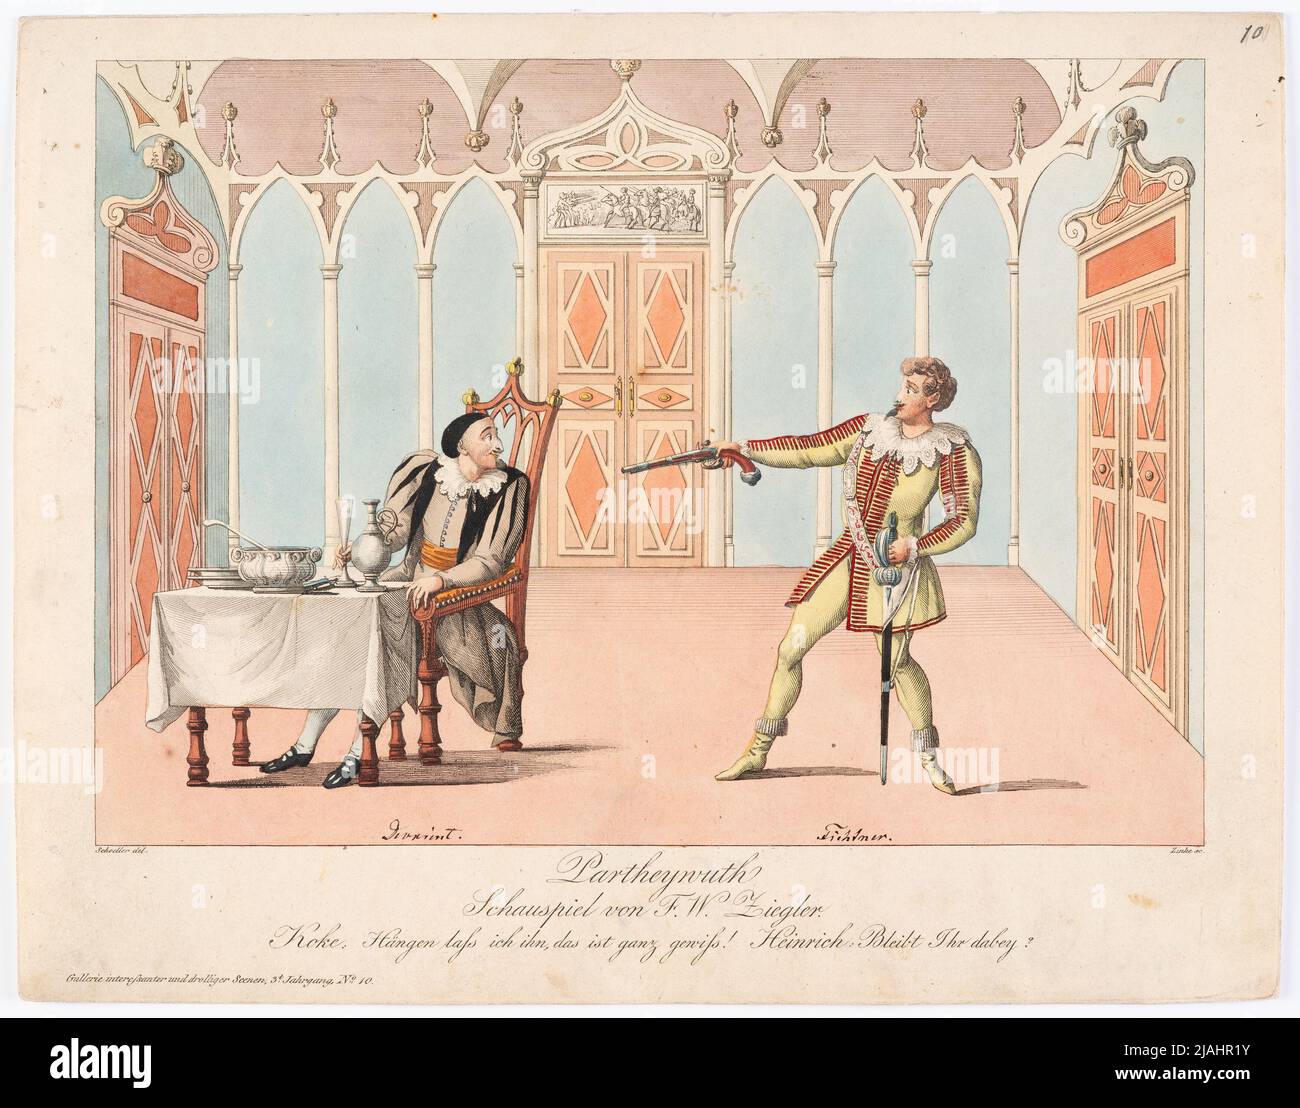 'Partheywuth' de F. W. Ziegler (Gallerie Droller Scenen para el periódico teatral, 3rd año, Nº 10). Johann Wenzel Zinke (1782-1851), grabador de cobre, después de: Johann Christian Schoeller (1782-1851), artista Foto de stock